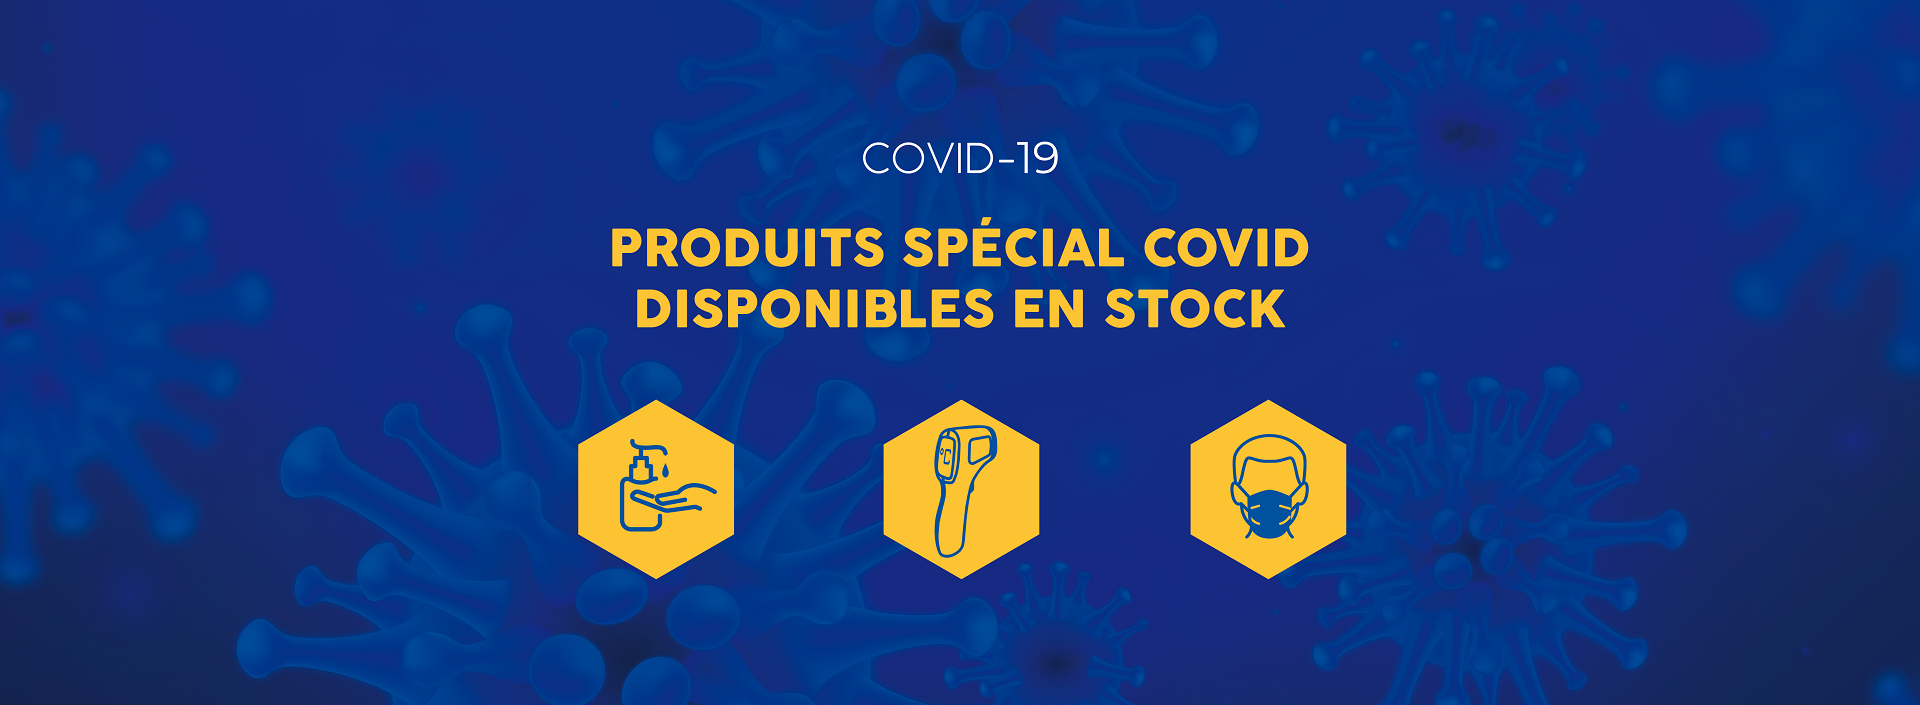 Articles "spécial Covid" disponibles en stock chez consomed